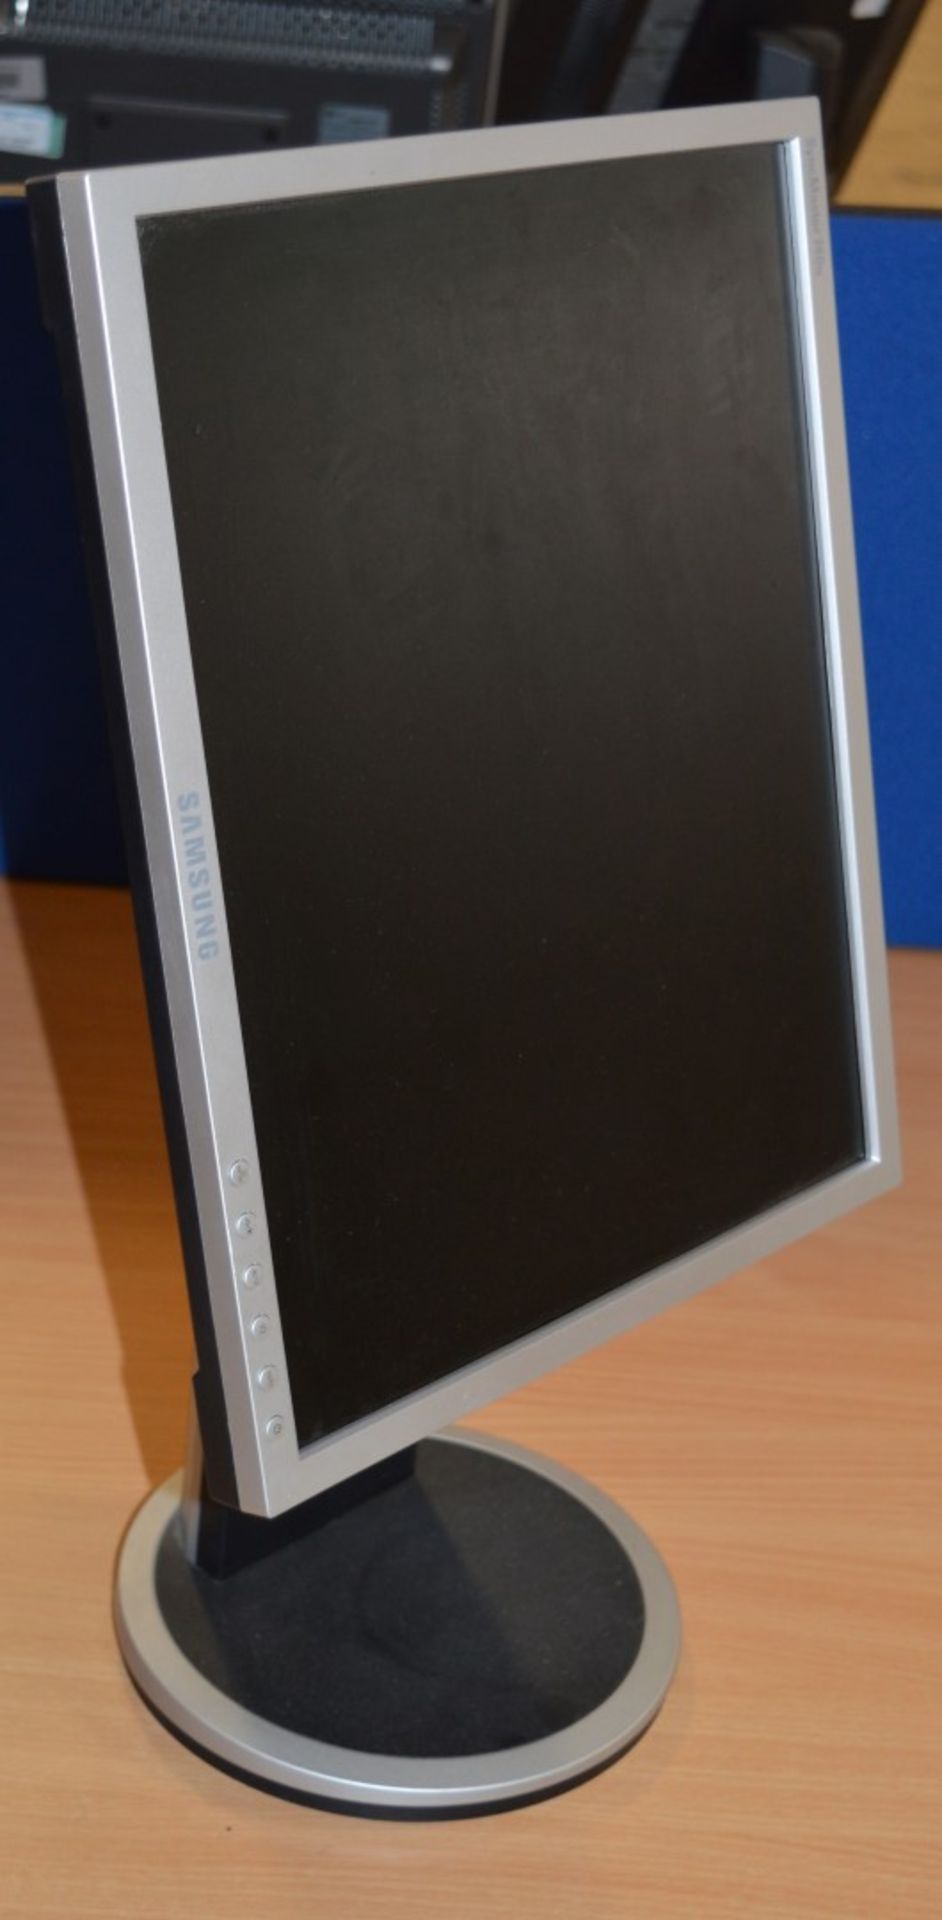 1 x Samsung Syncmaster 740N Flatscreen LCD Monitor - 17 Inch Screen Size - 1280 x 1024 Native - Image 3 of 5